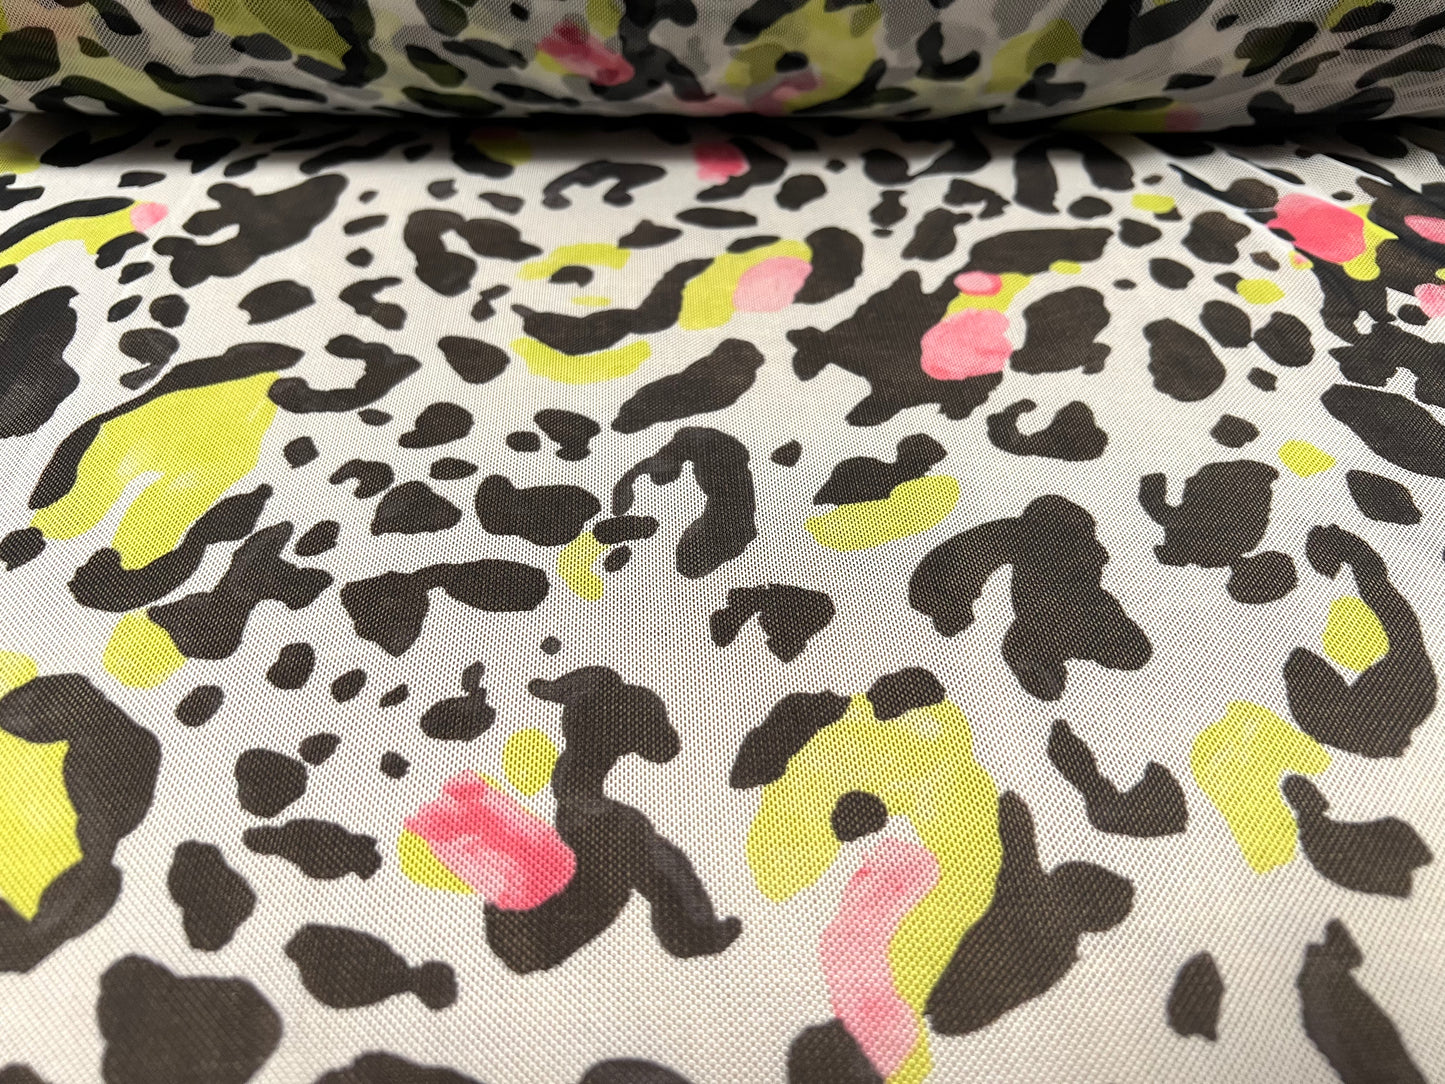 Power mesh net sheer stretch spandex fabric, per metre - stylised cheetah print - white black pink & lime